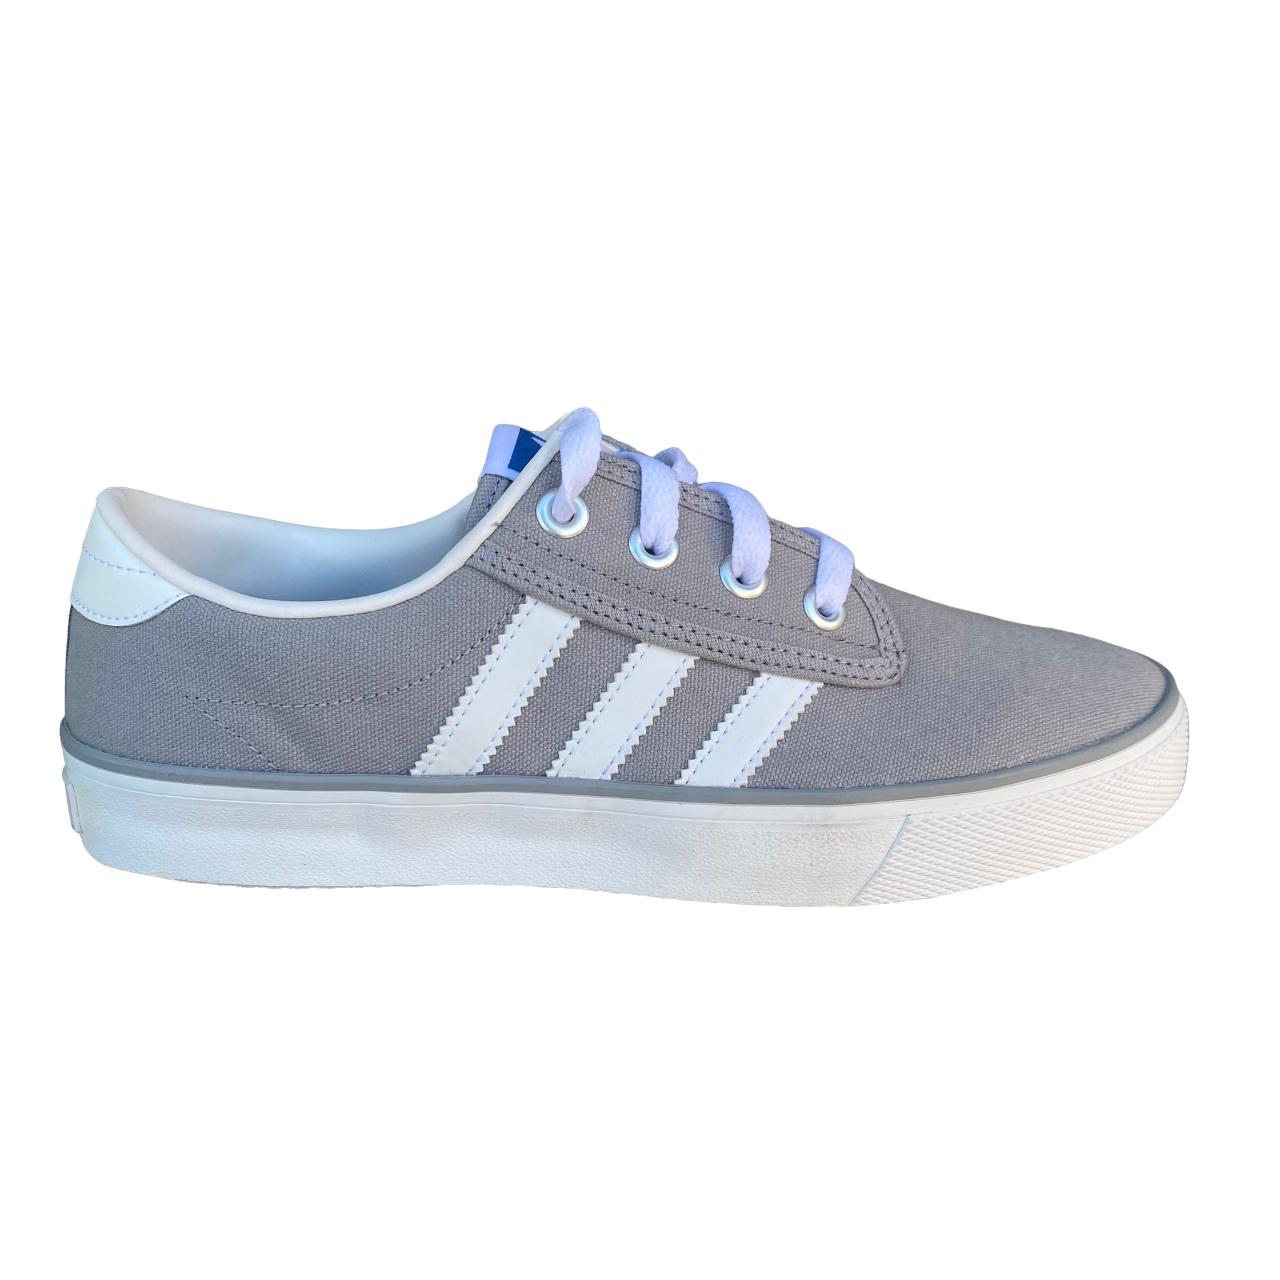 Adidas scarpa sneakers da adulto in tela Kiel M20322 grigio